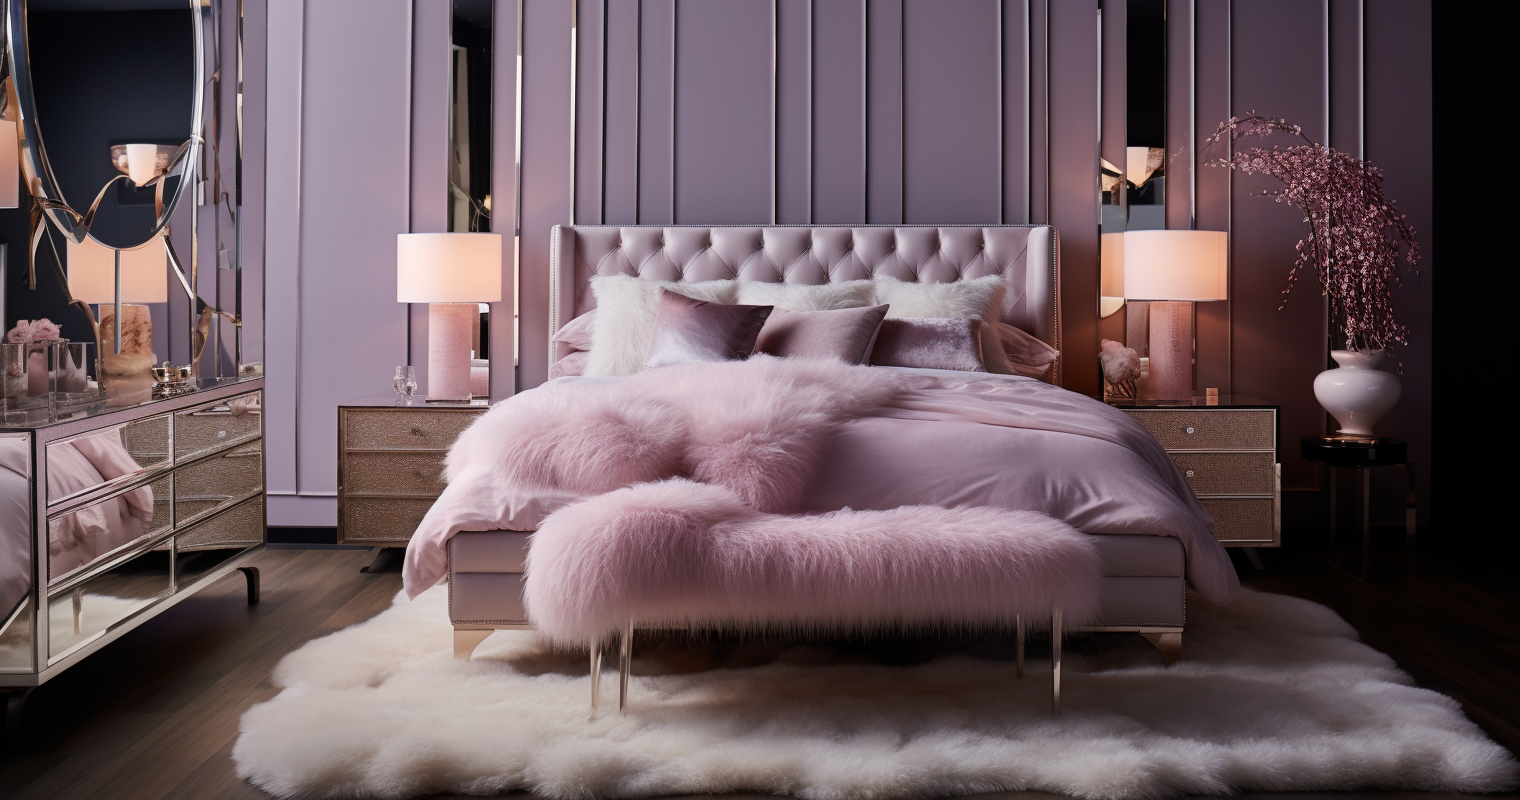 Luxurious Bedroom Retreat with Plush Textiles